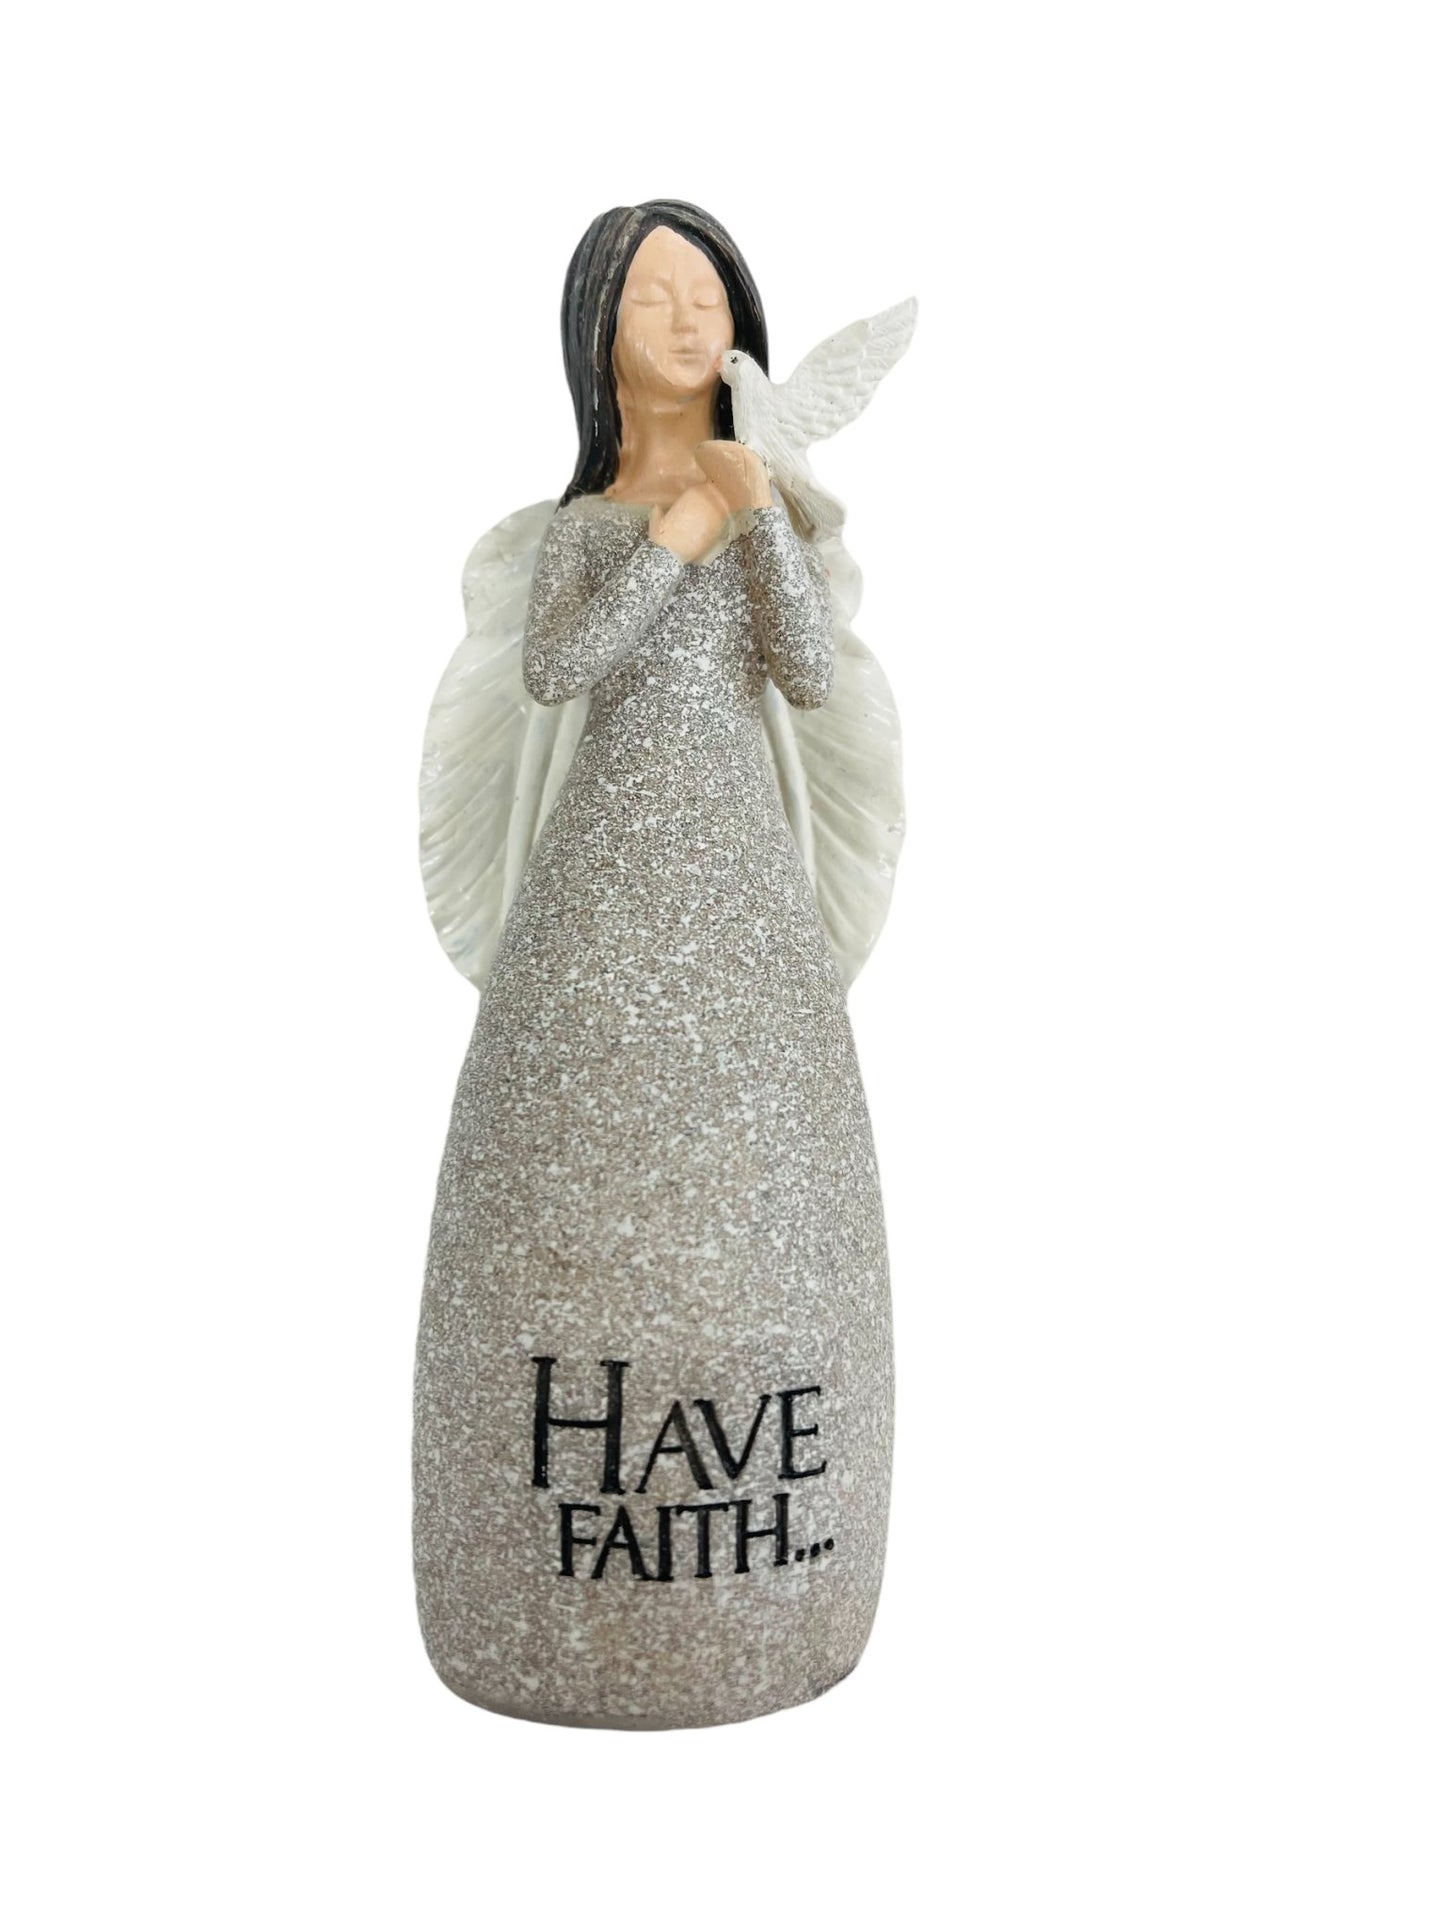 Have Faith Miniature Memorial Angel Figurine - Celebrate Prints